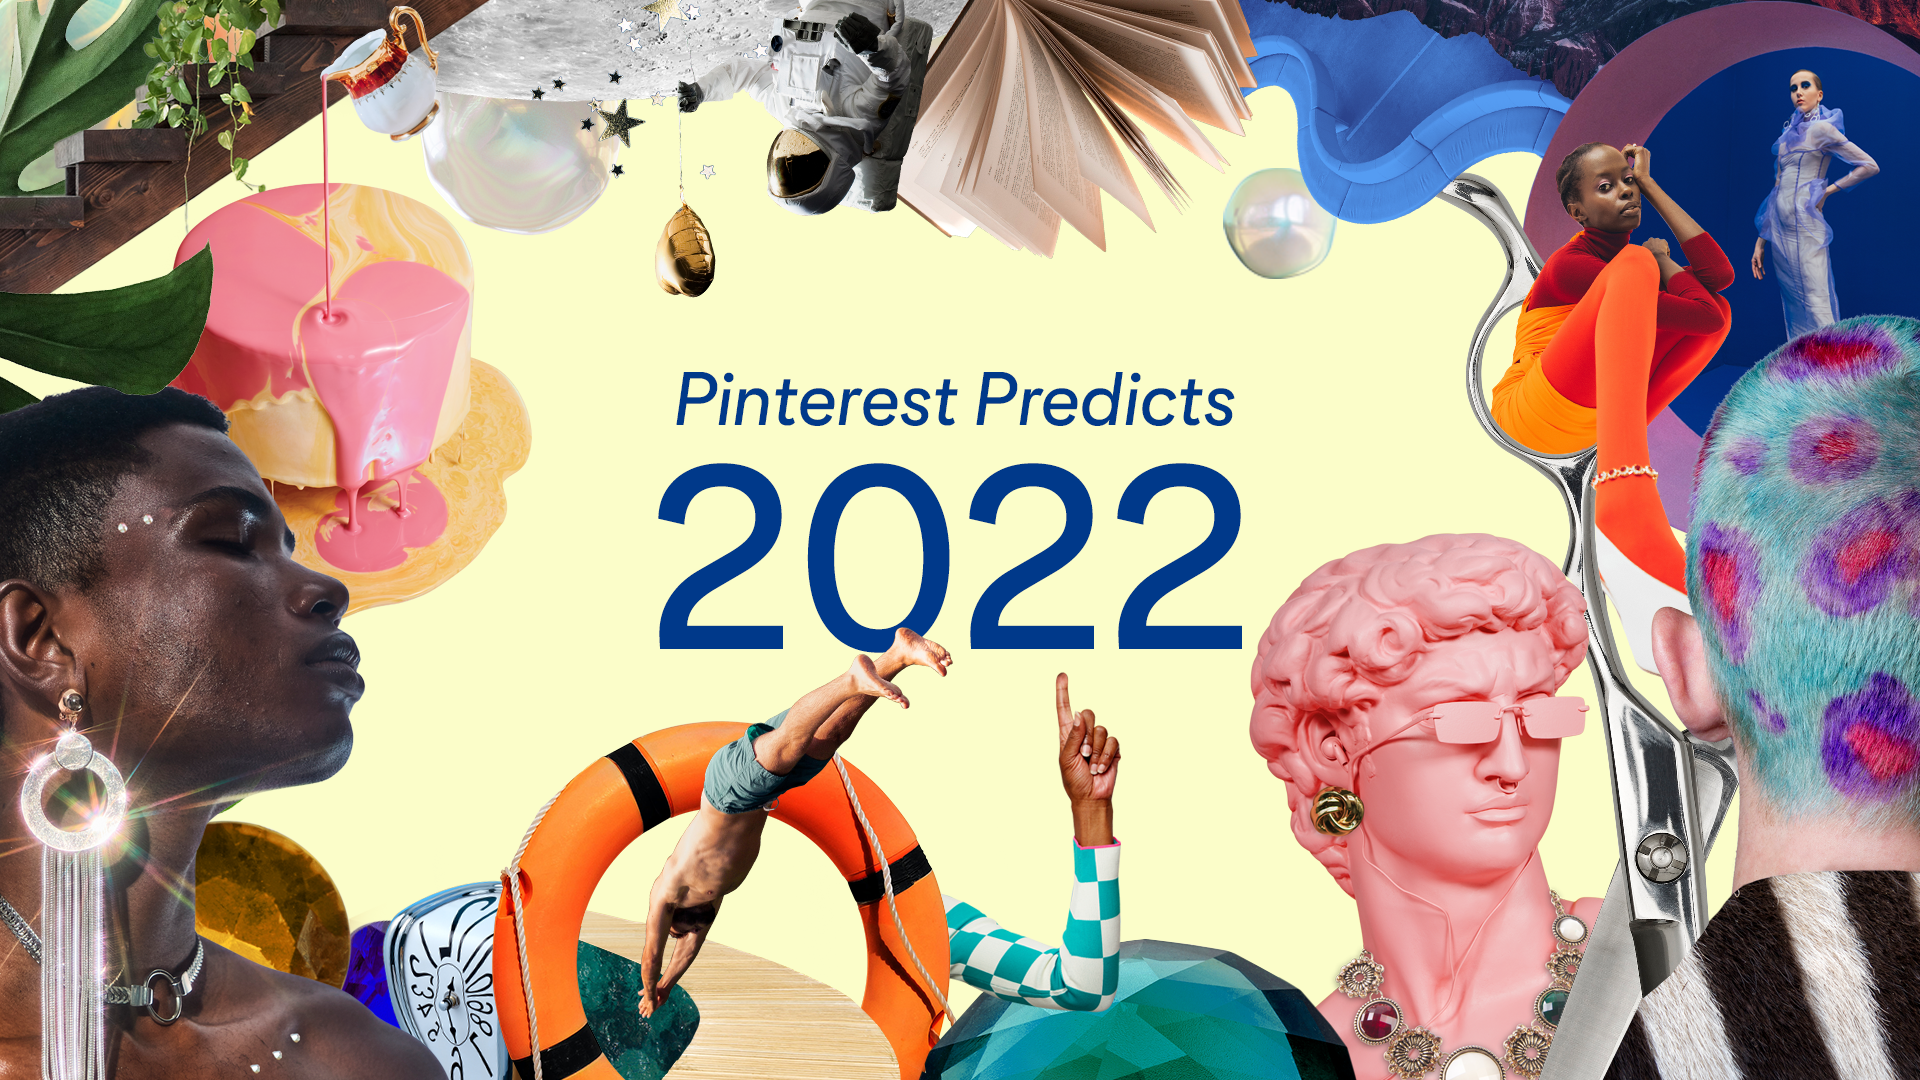 Pinterest trends predictions